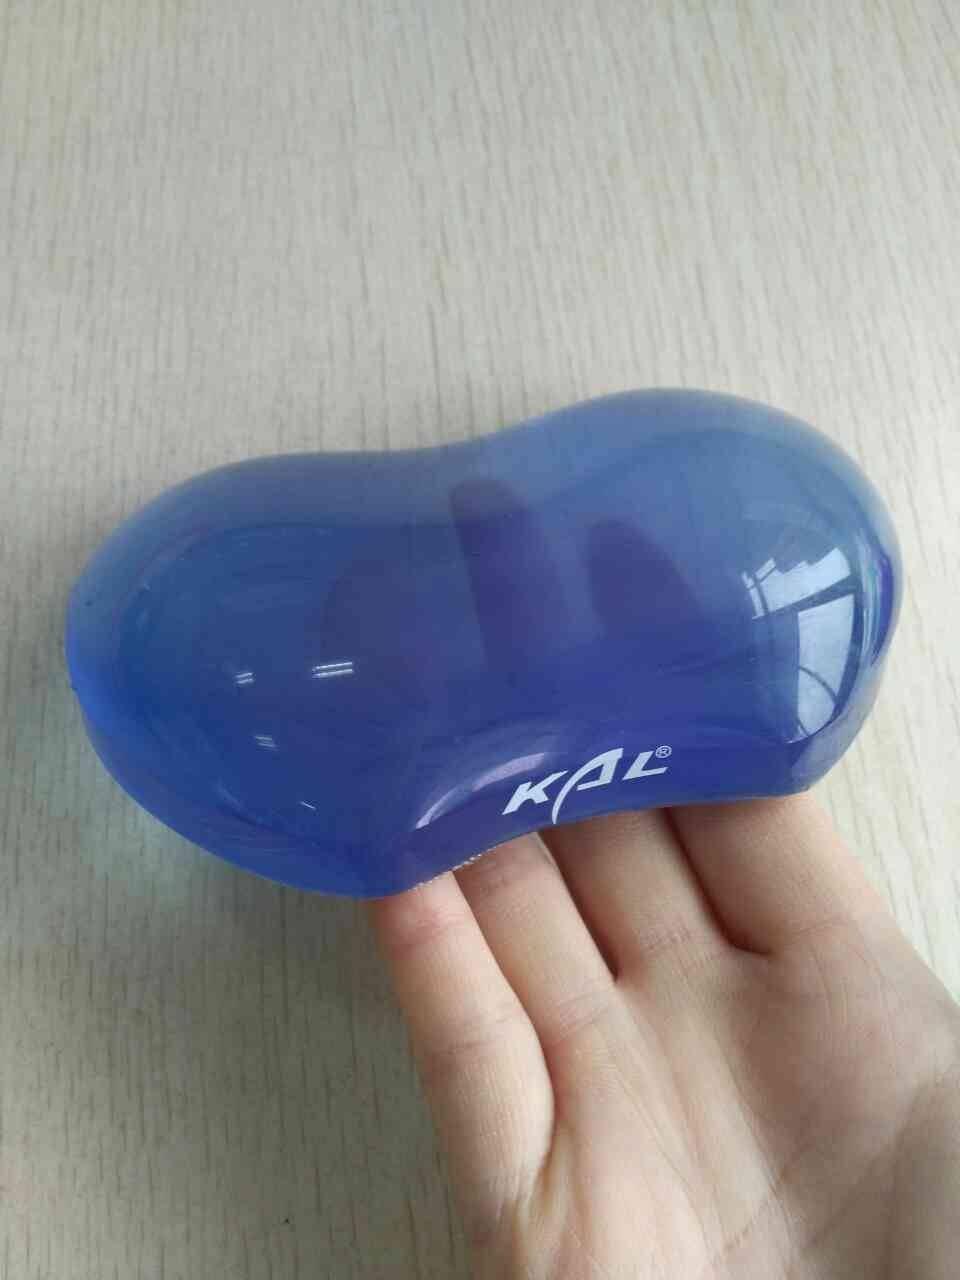 KLW-4027T Silicone Gel Wrist Rest  Translucence Heart-shaped Ergonomic Mouse Pad